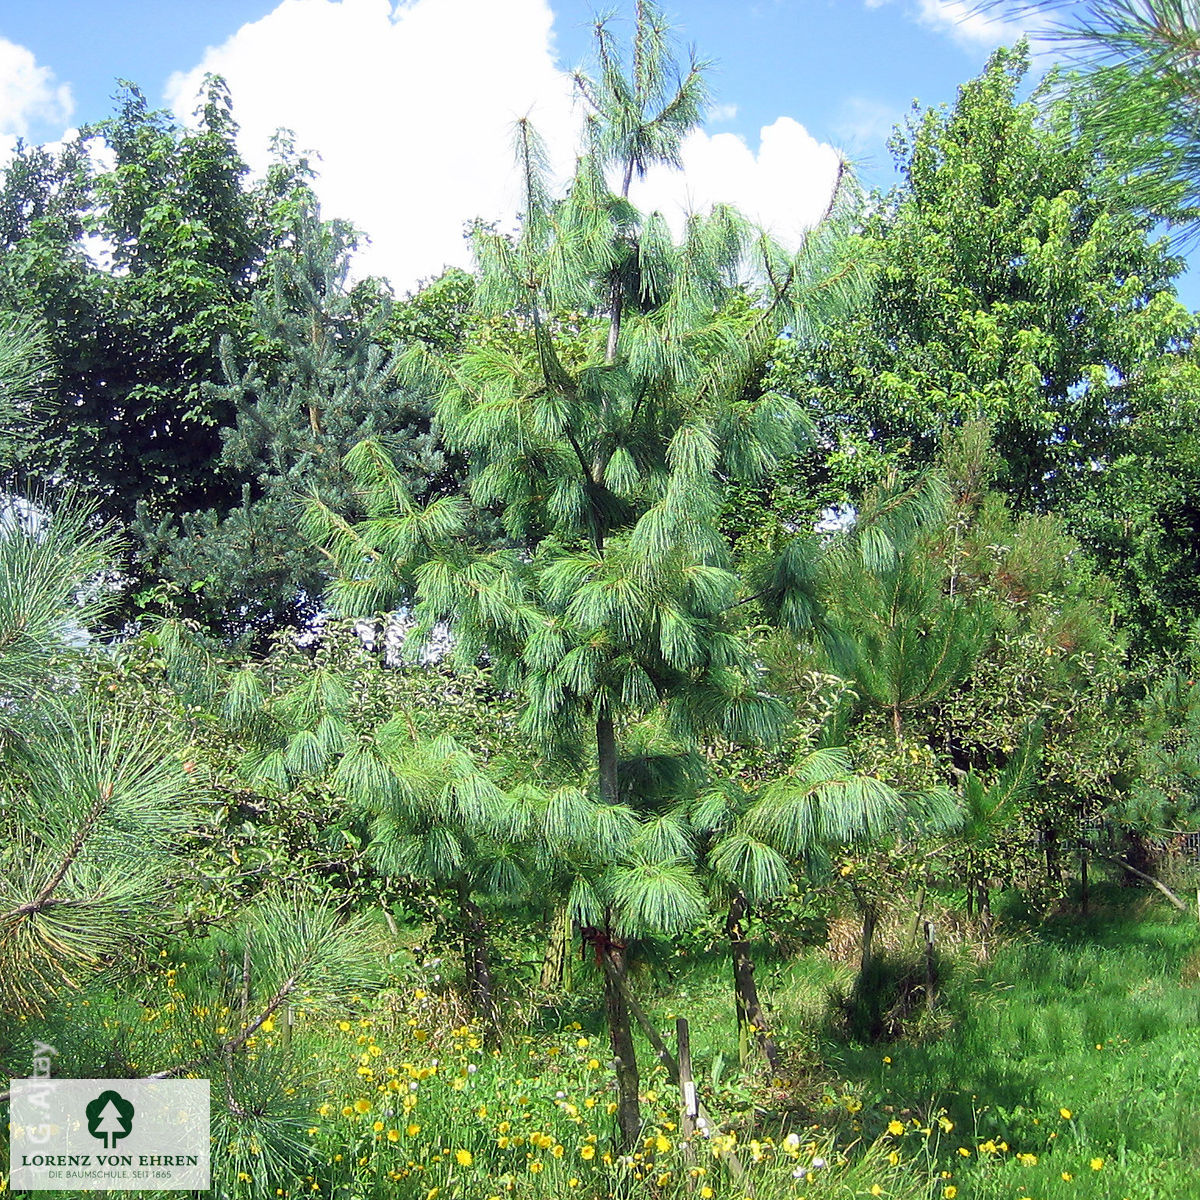 Pinus schwerinii